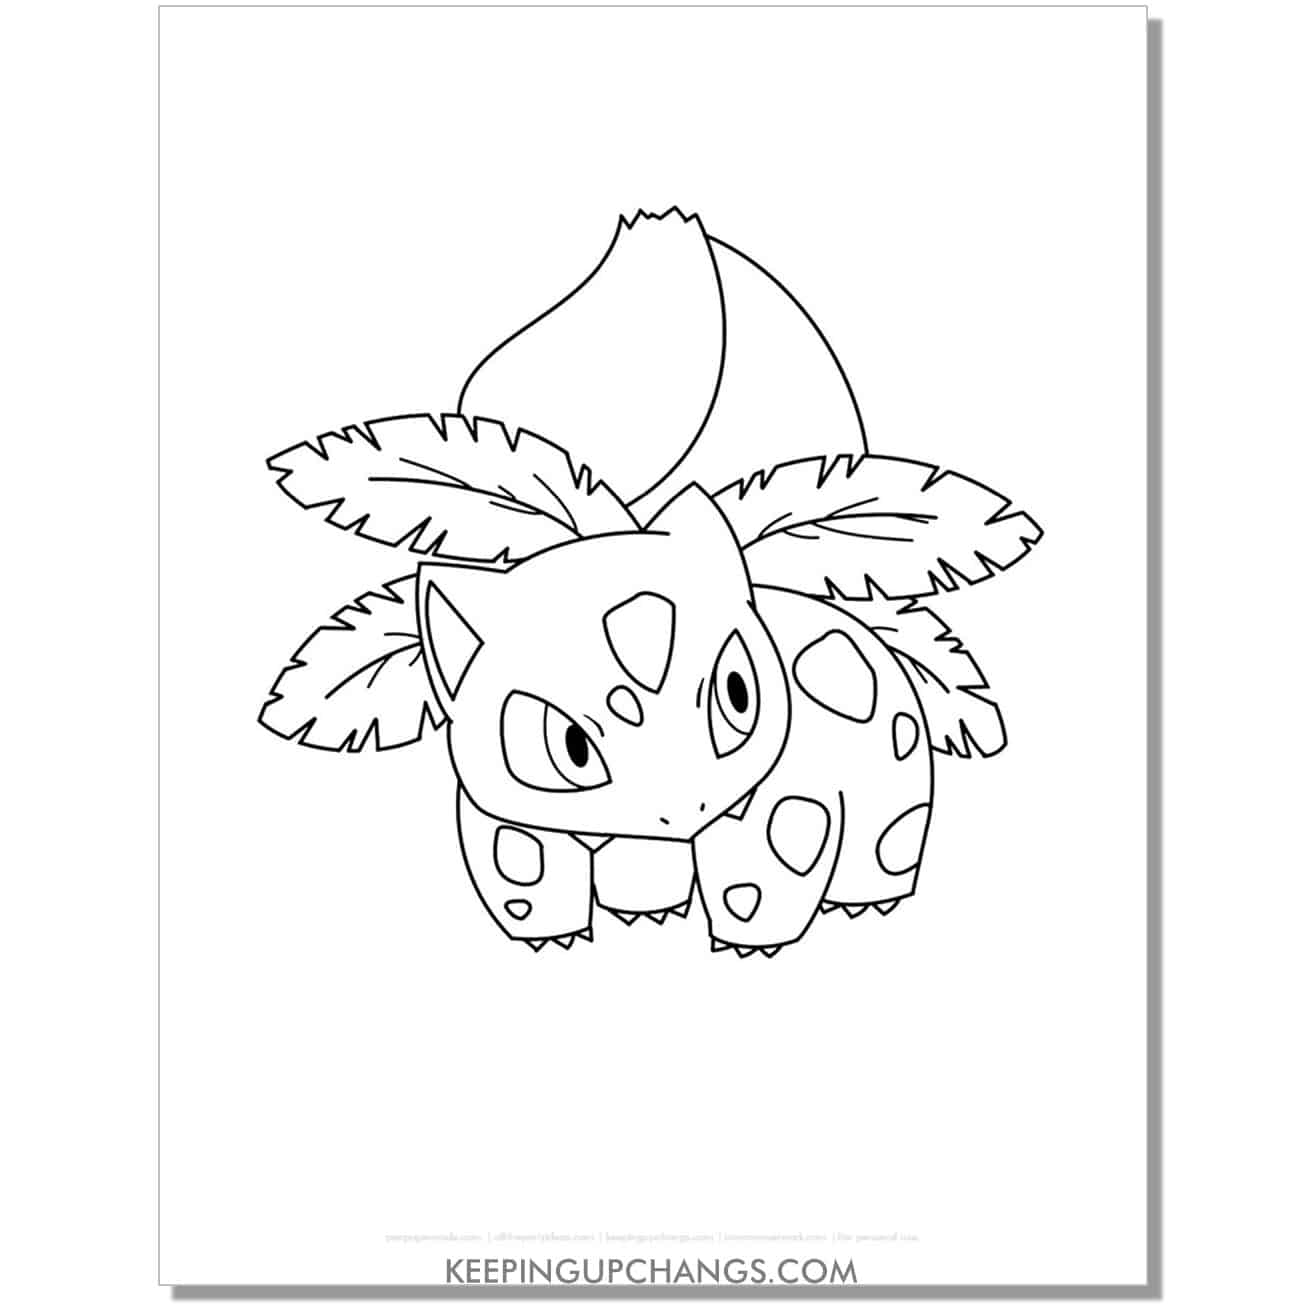 ivysaur pokemon coloring page, sheet.